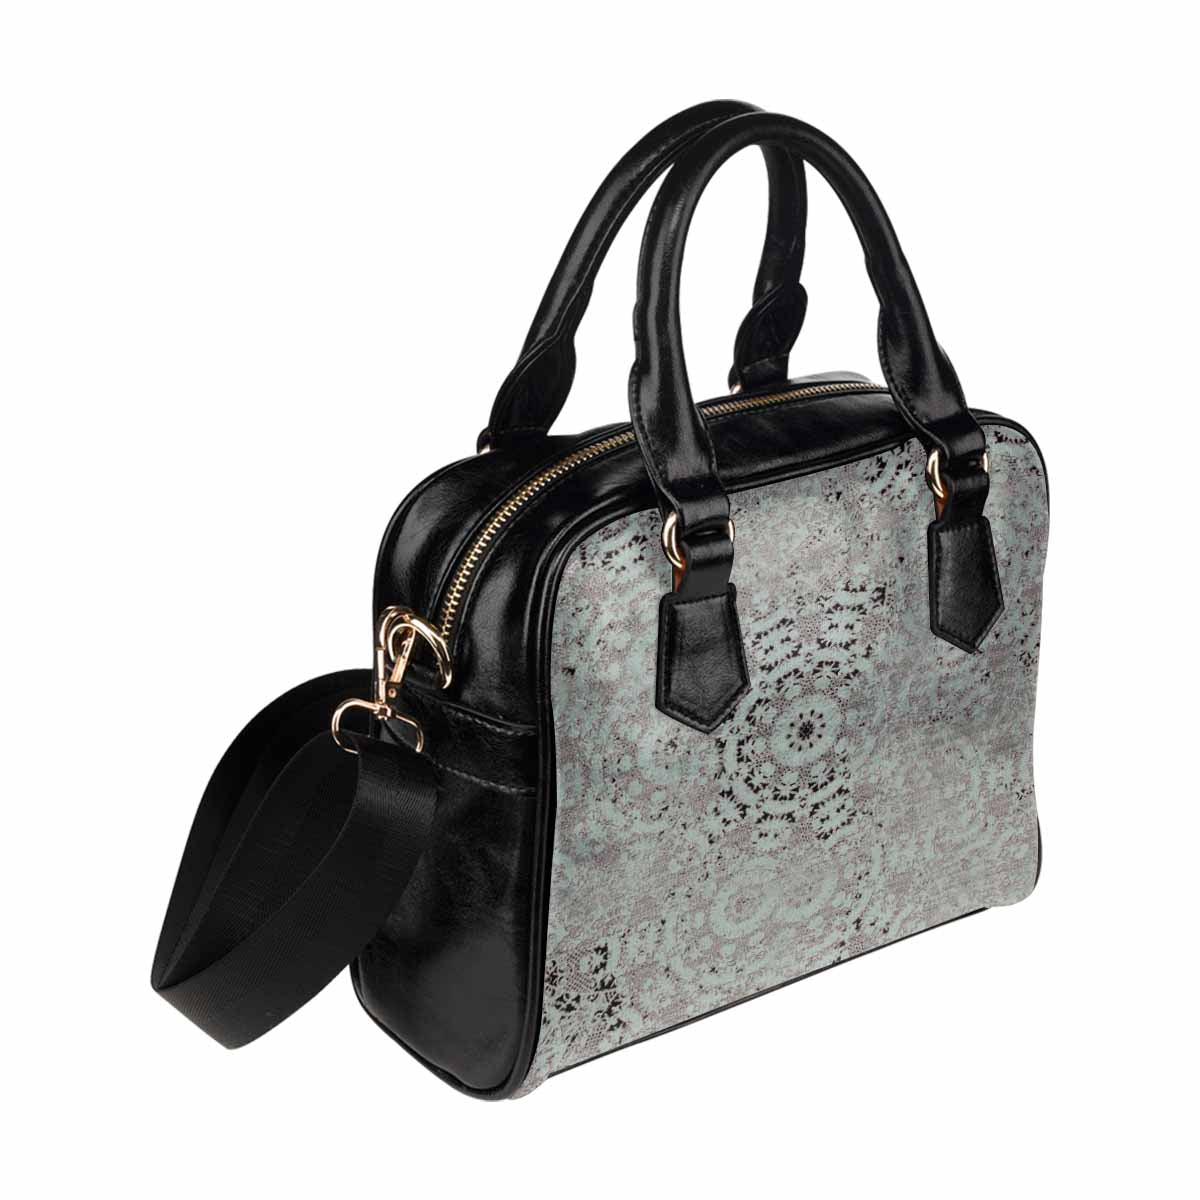 Victorian lace print, cute handbag, Mod 19163453, design 51